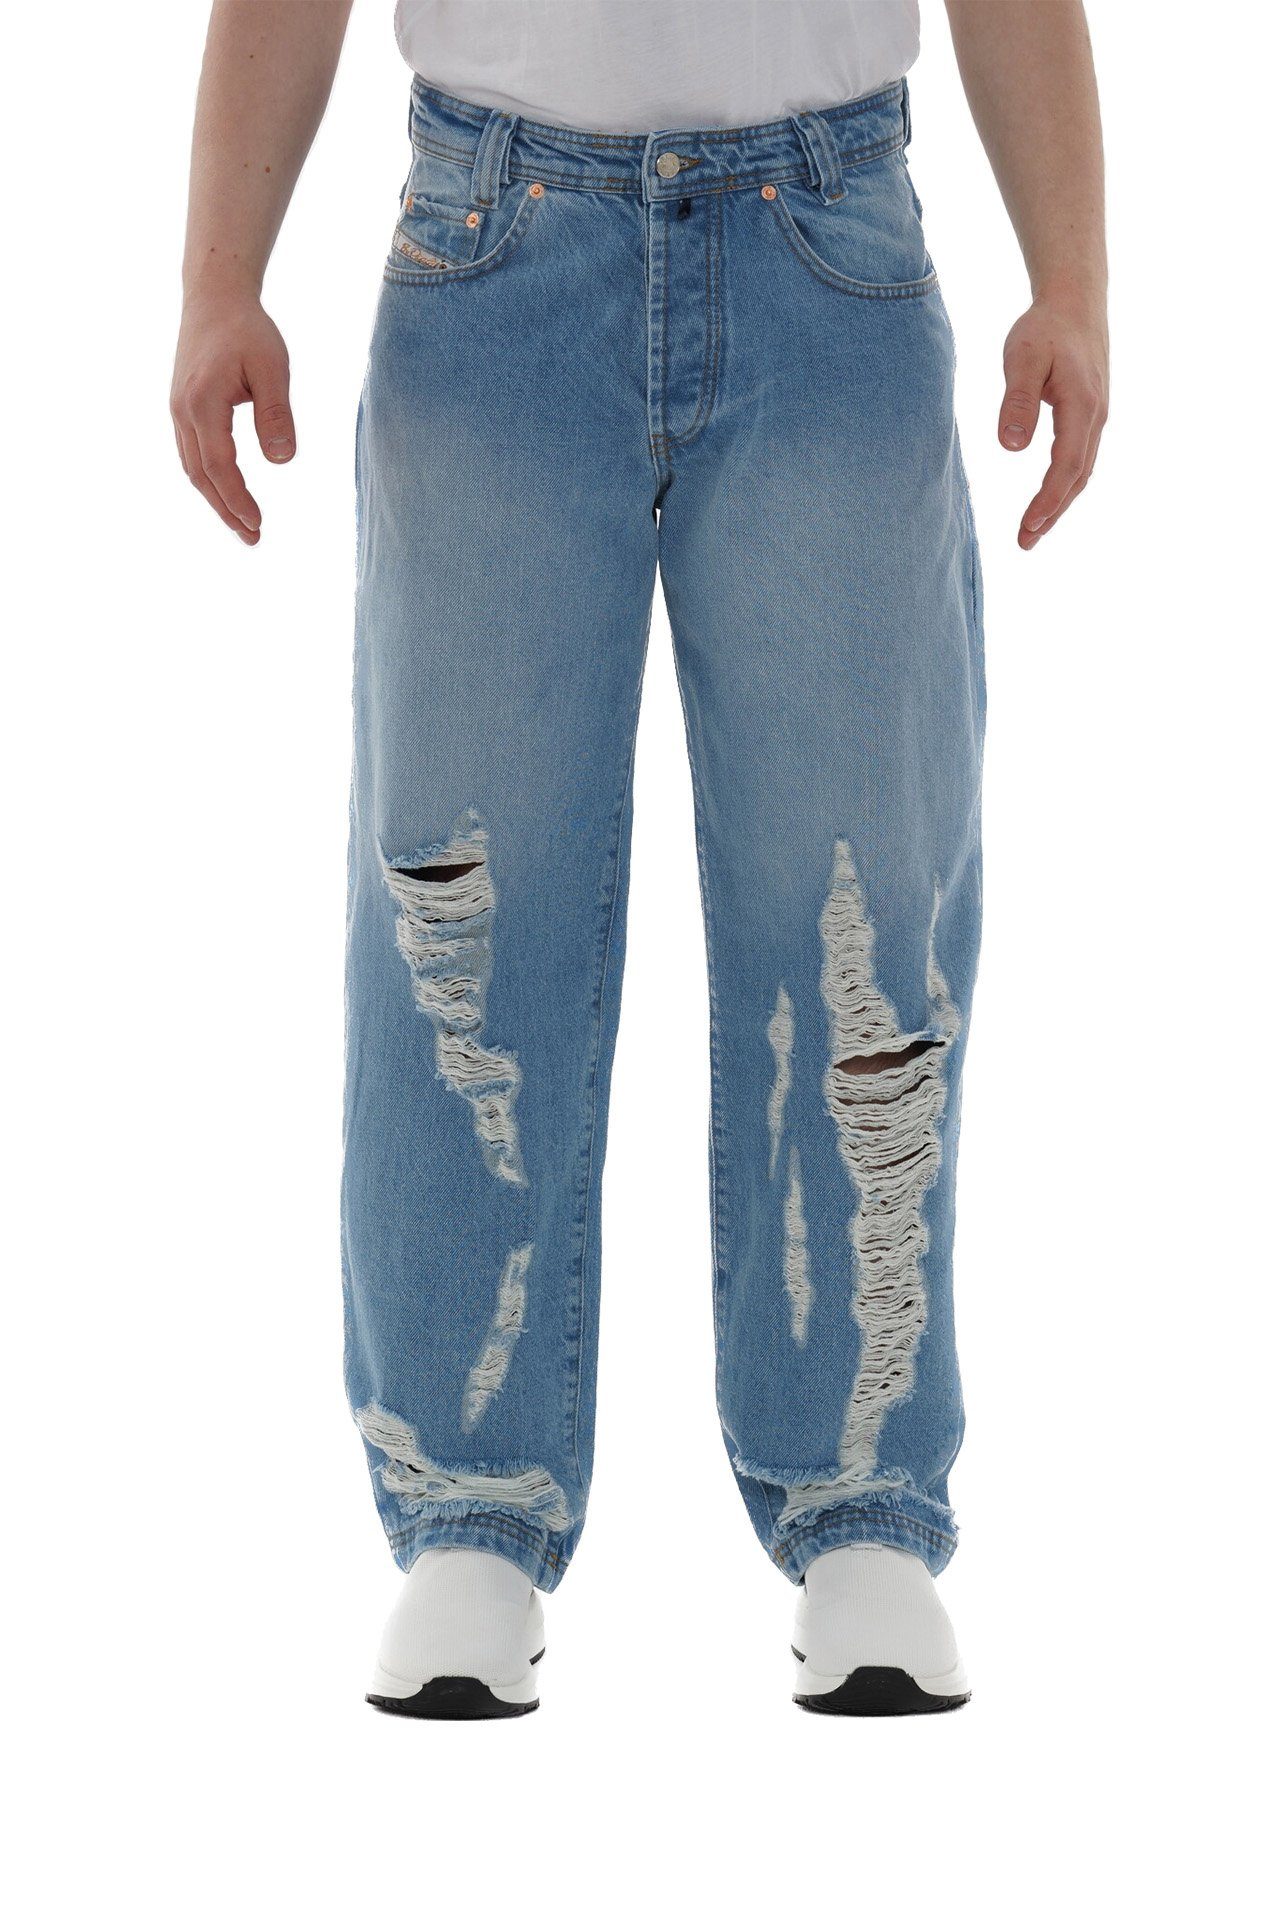 PICALDI Jeans Raze Pocket Weite Five 471 Zicco Jeans Loose Fit, Jeans